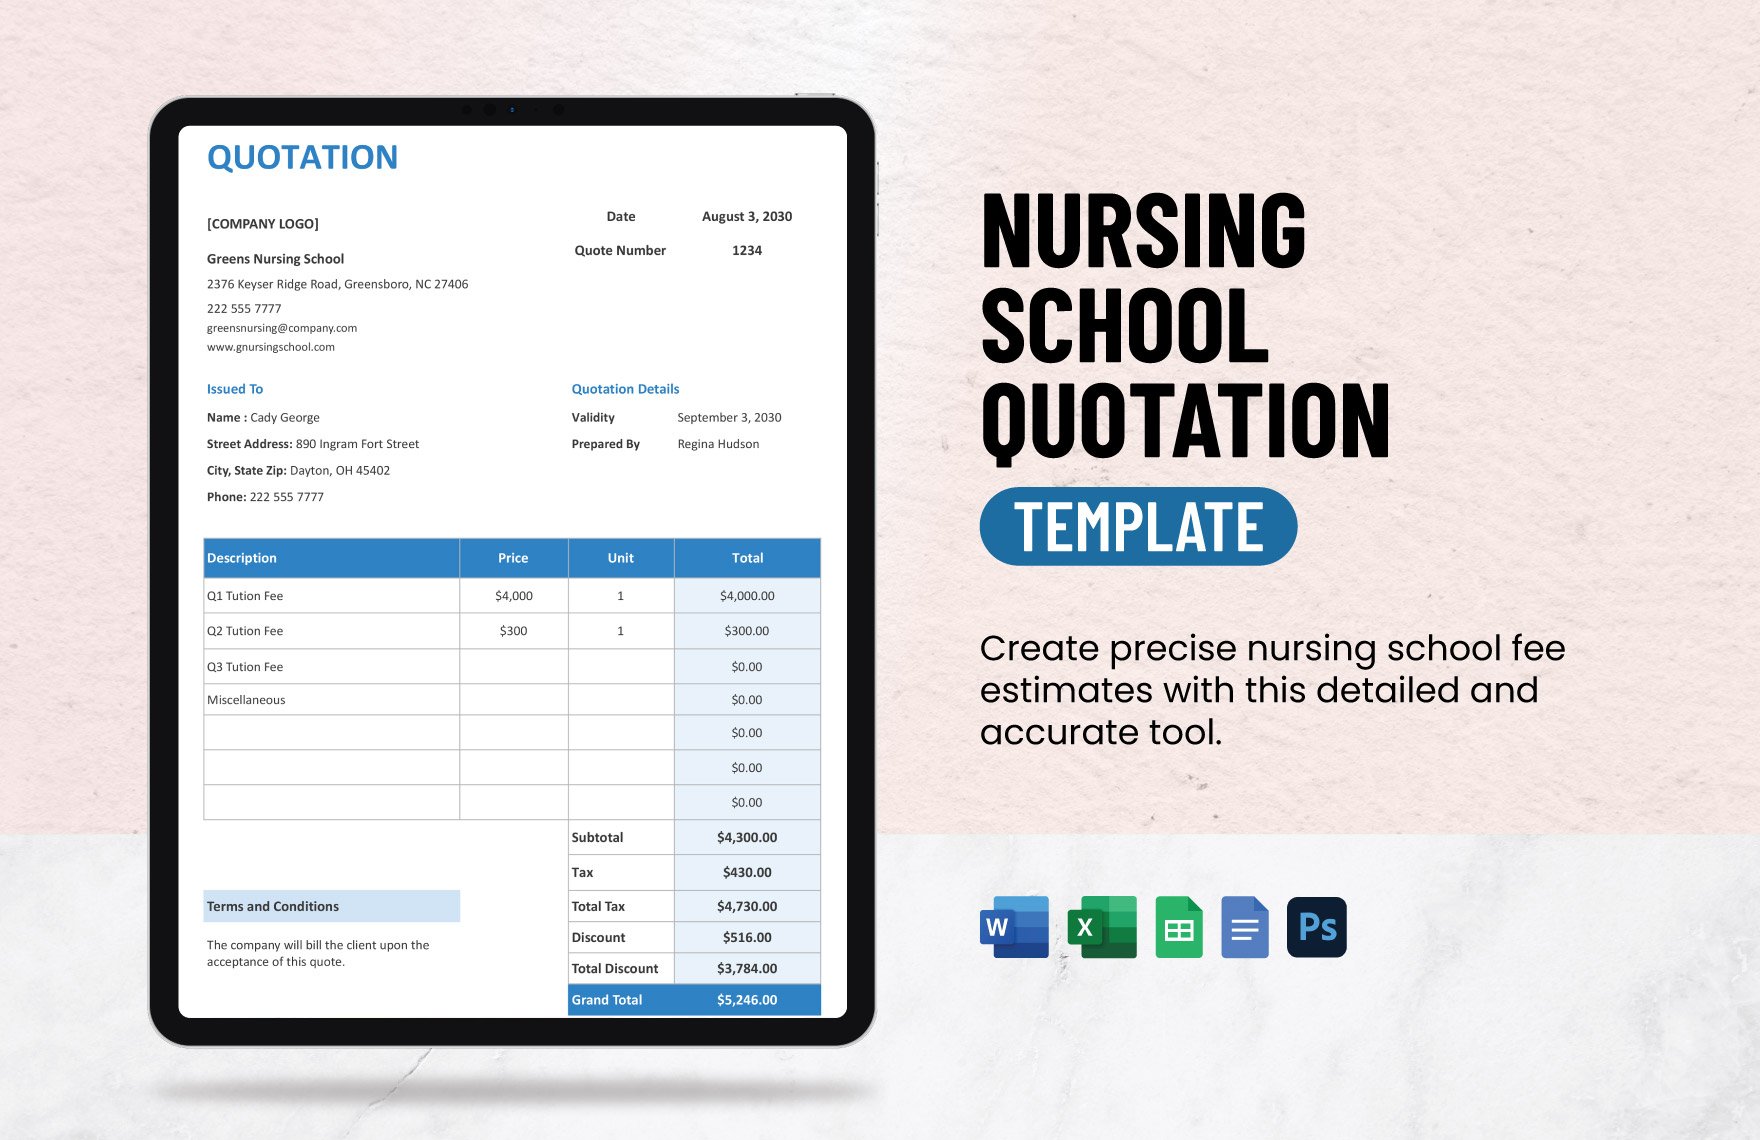 Nursing School Quotation Template in Word, Google Docs, Excel, Google Sheets, PSD